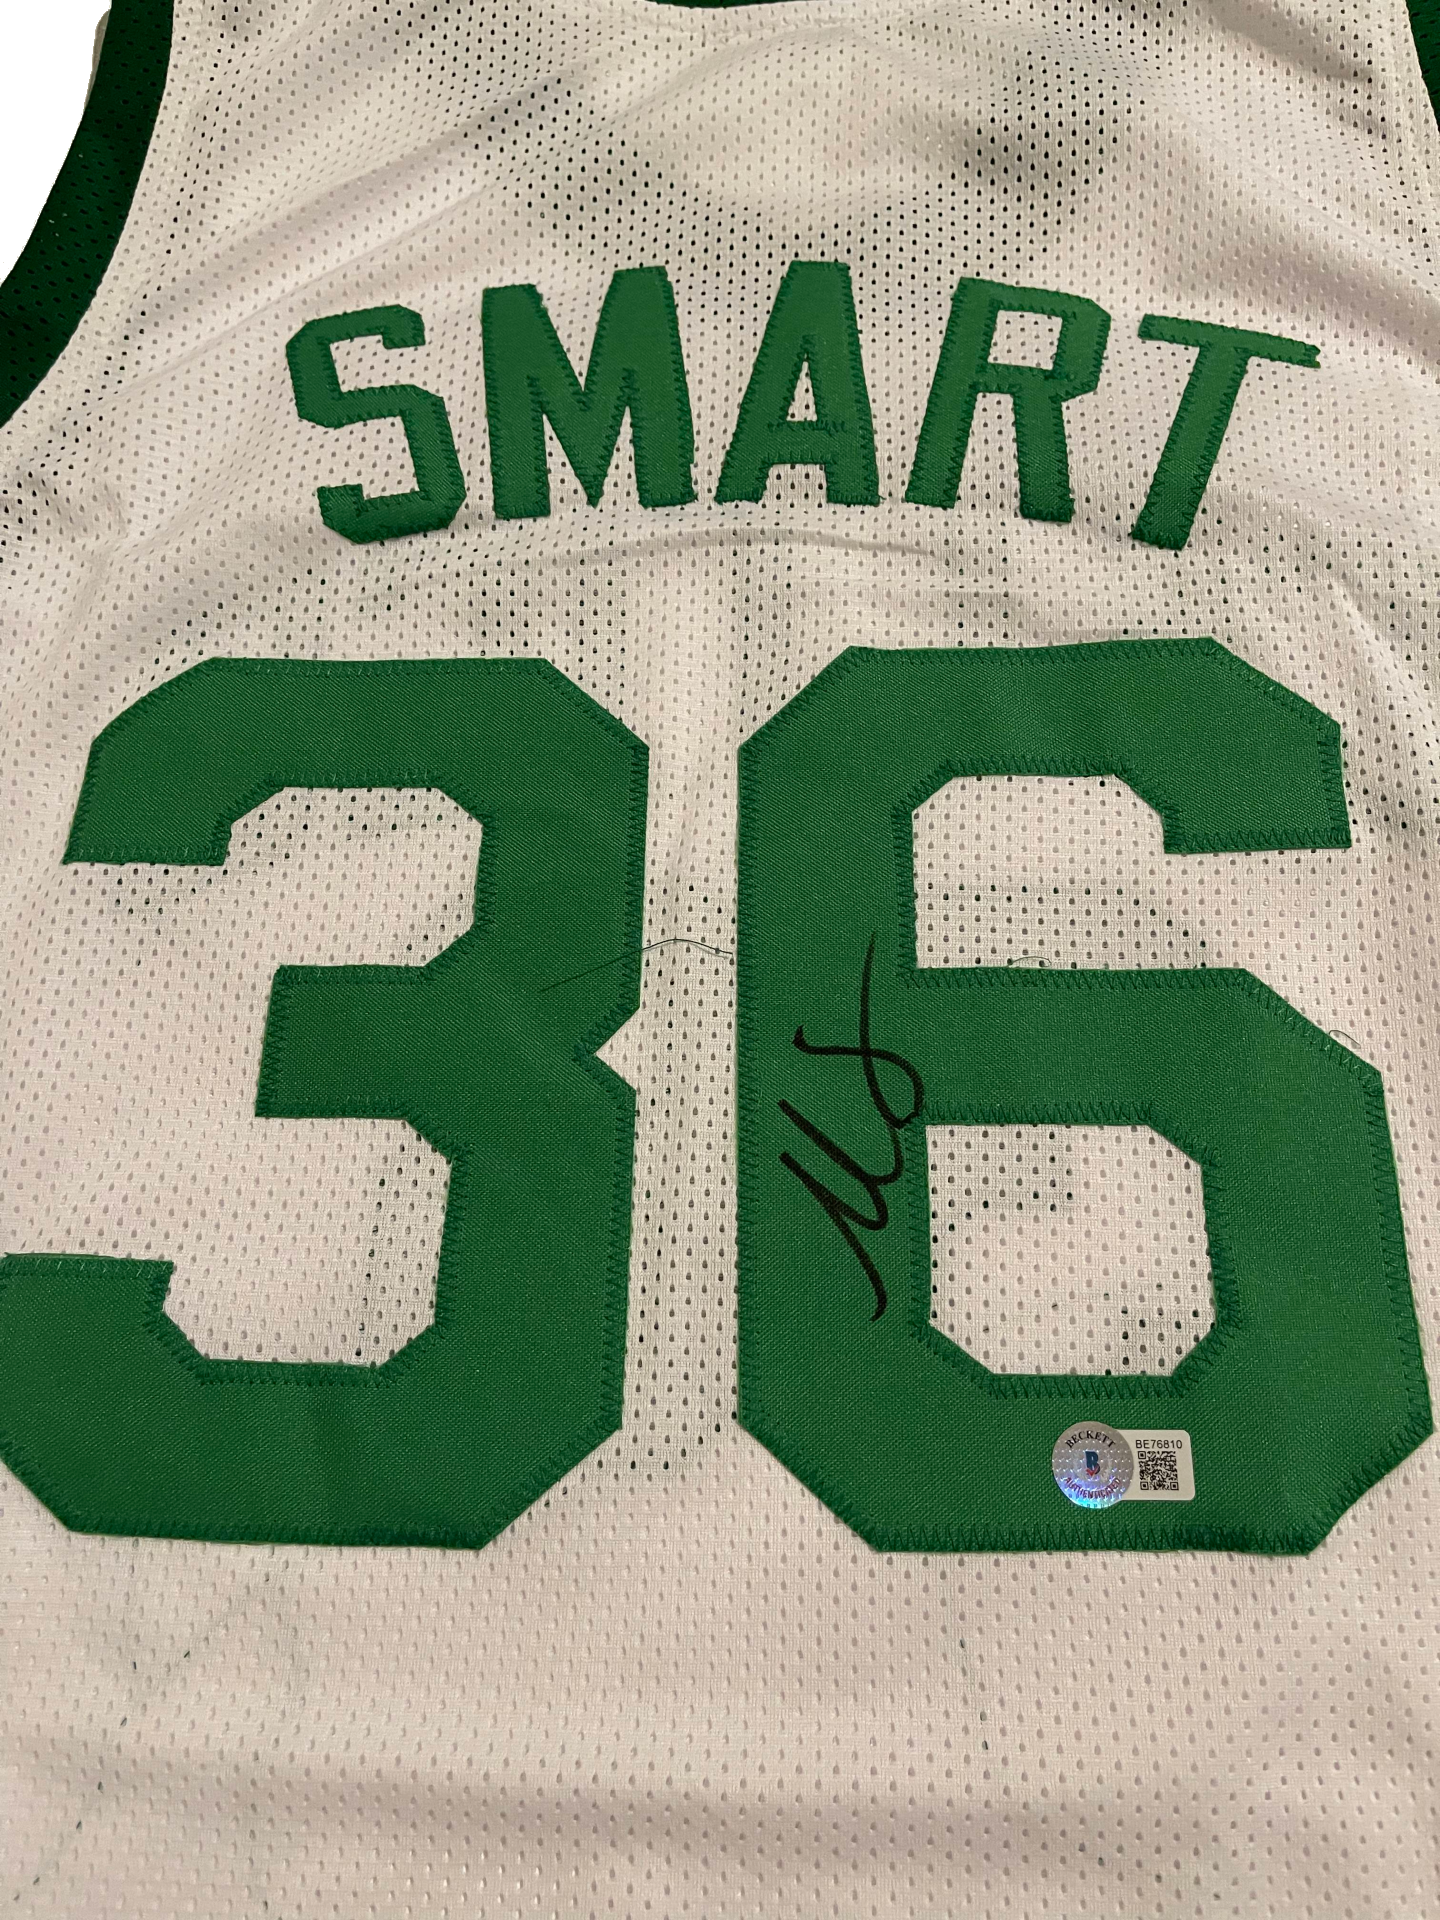 Marcus Smart Boston Celtics Autographed Green Nike Swingman Jersey